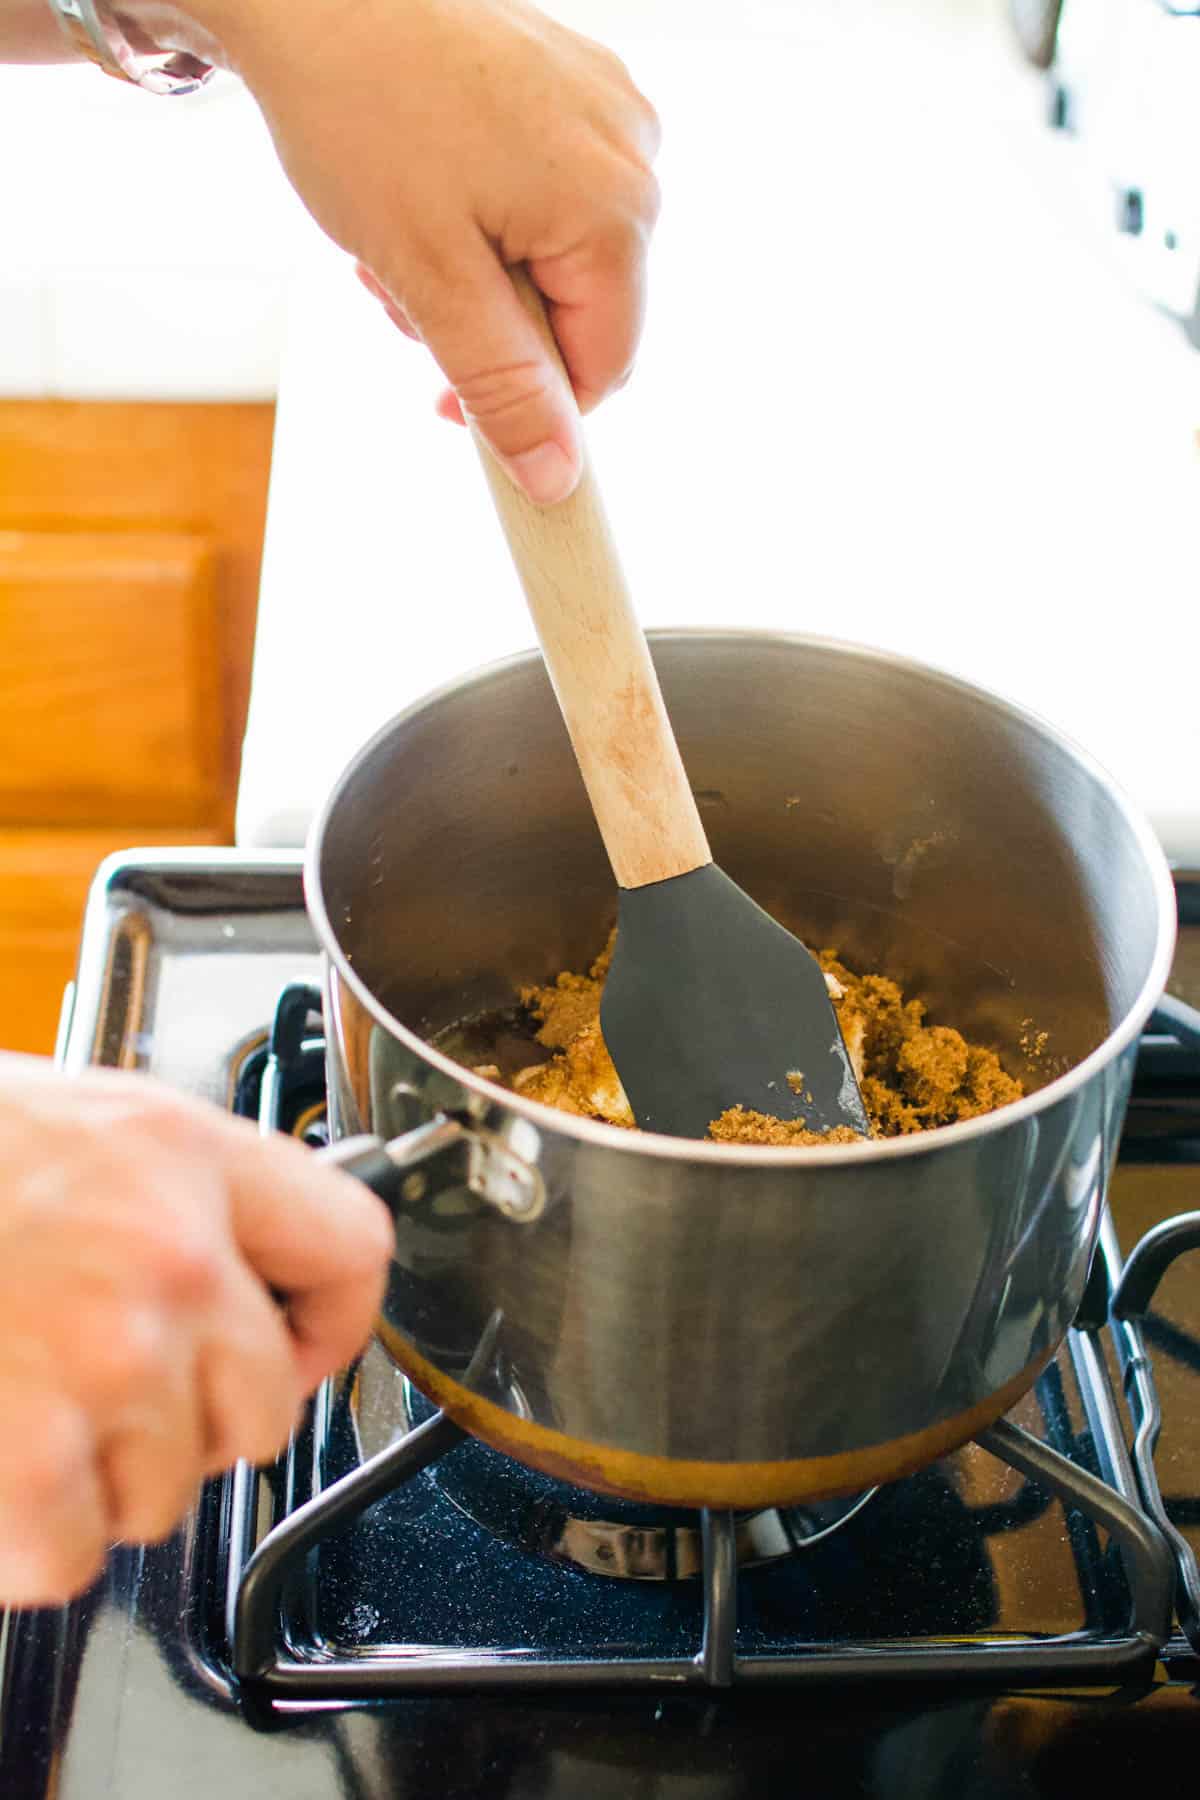 Woman mixing a saucepan on the stove.